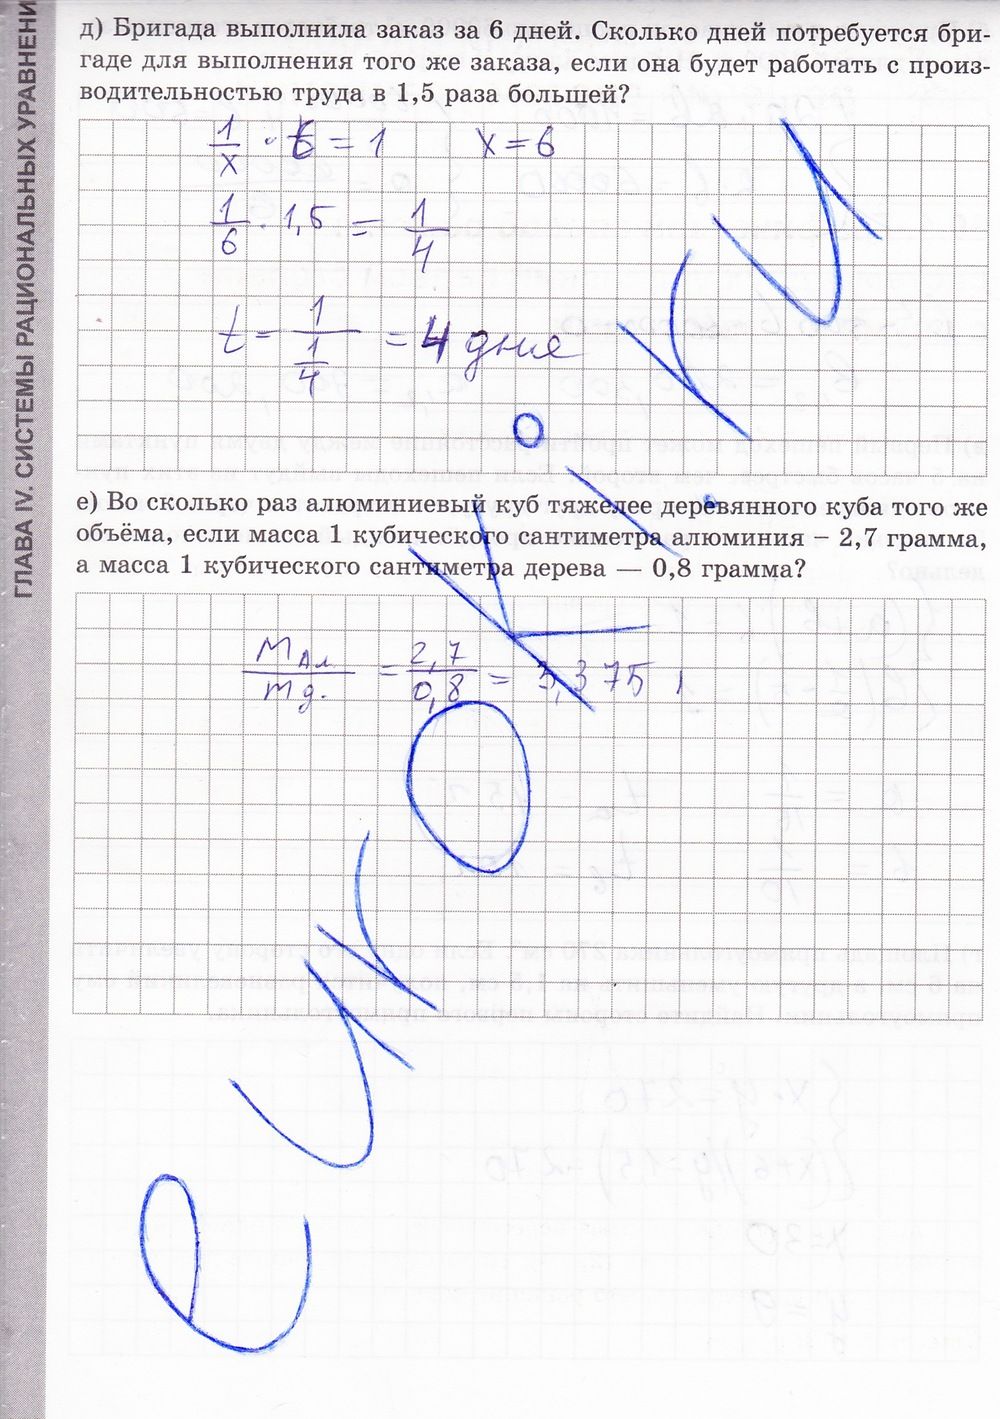 ГДЗ Алгебра 8 класс - стр. 116